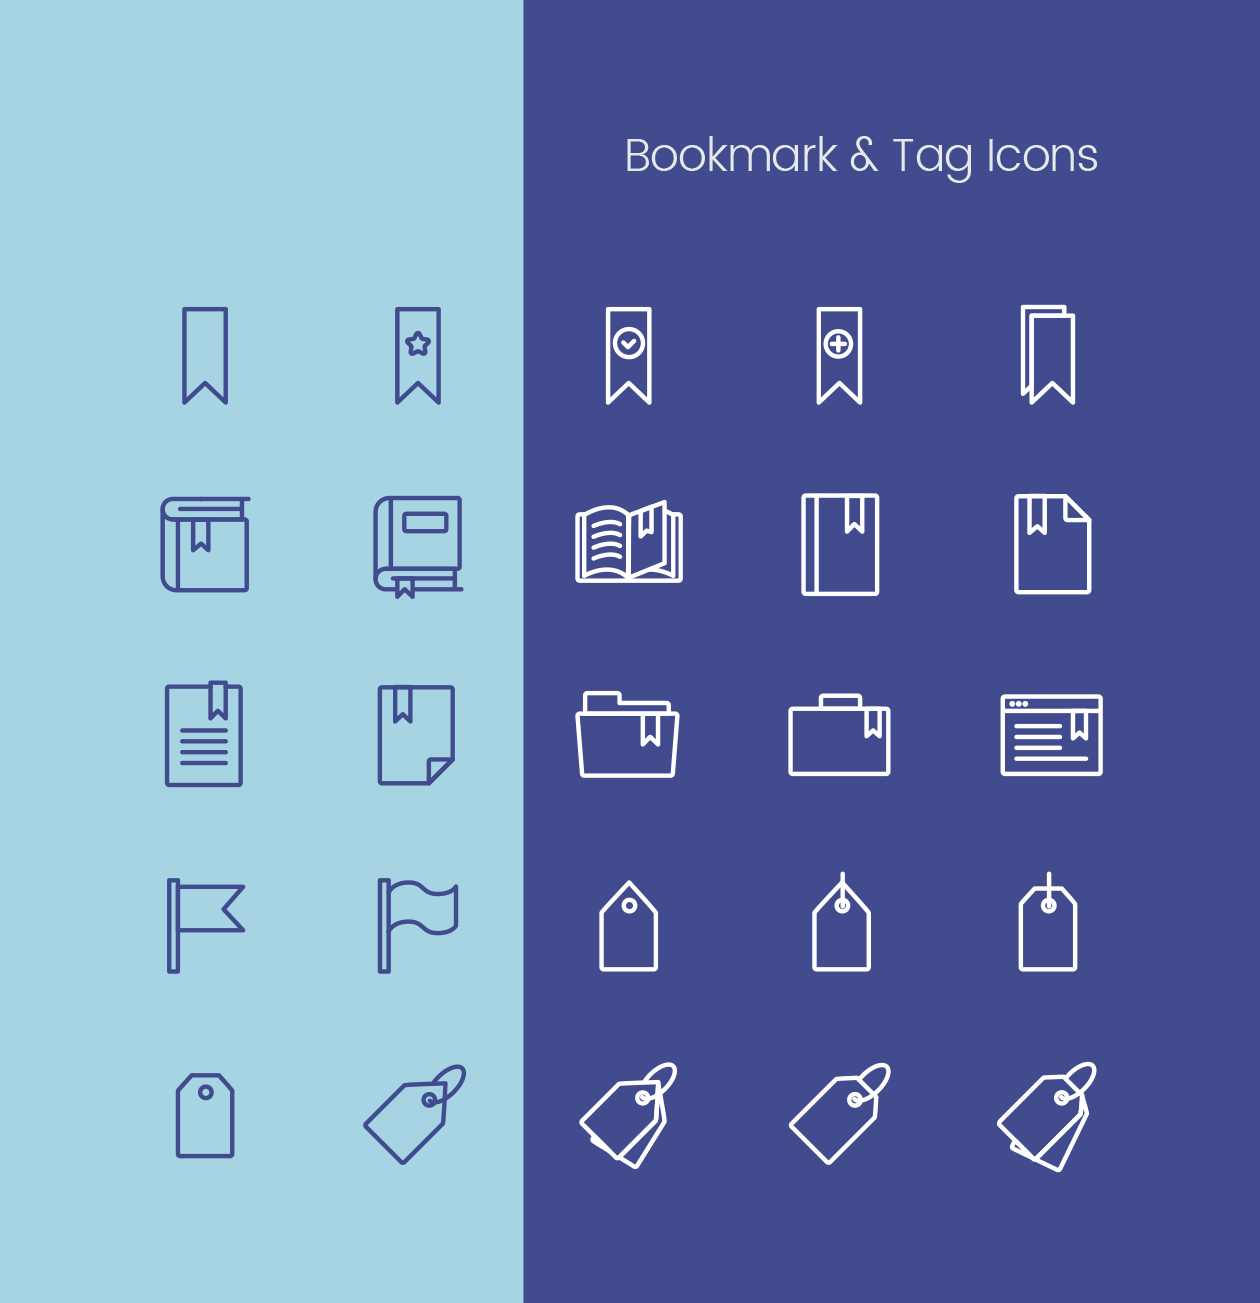 书签和标记矢量图标素材 Bookmark & Tag Icons插图